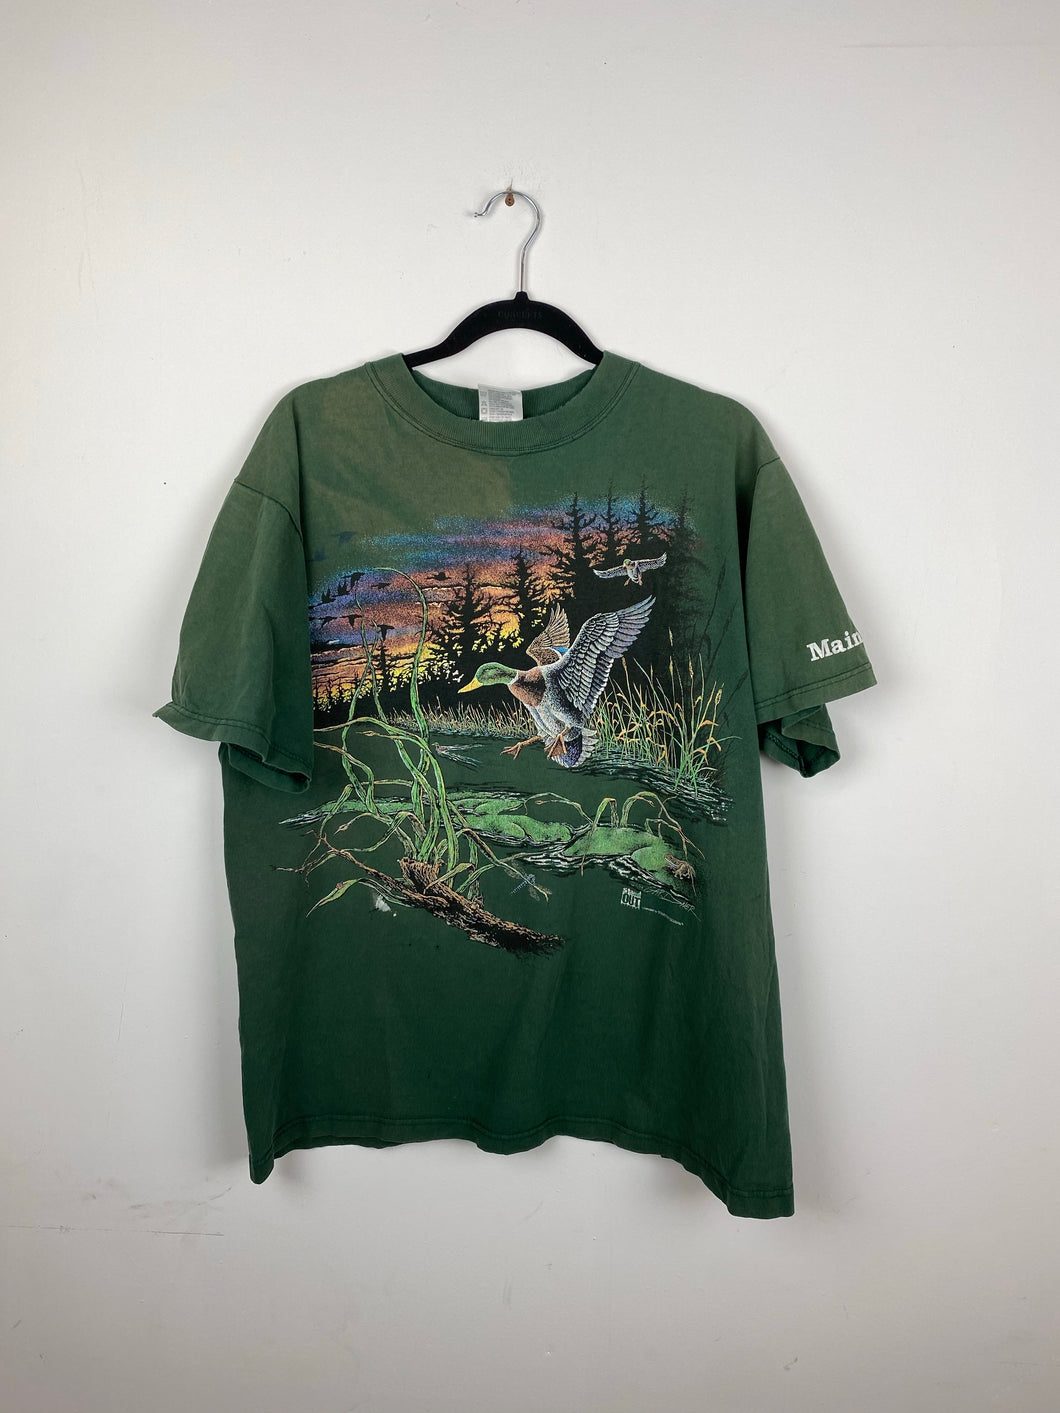 Vintage wildlife t shirt